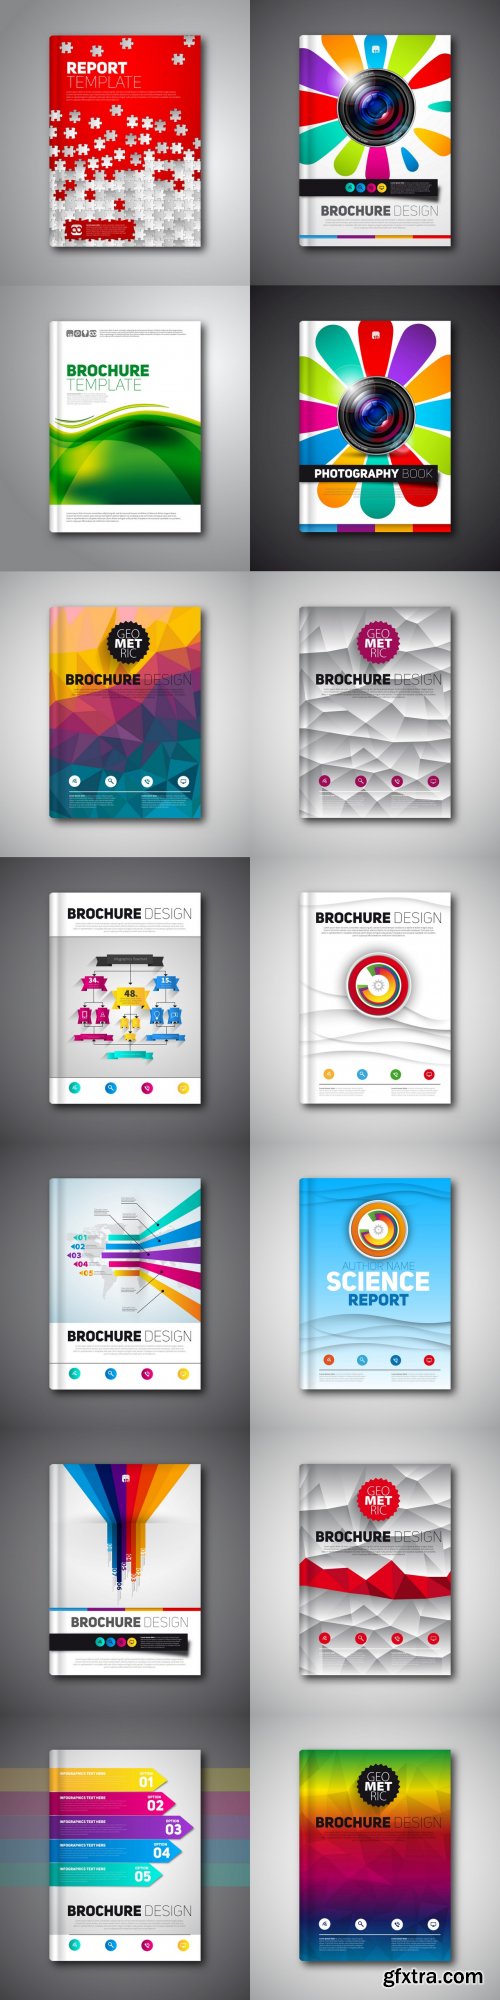 Book & broshure design 3